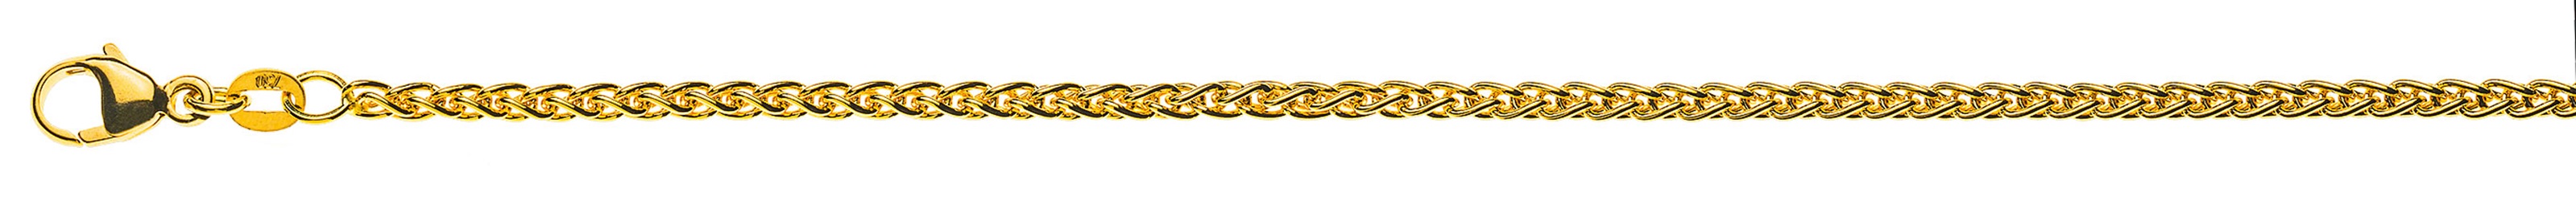 AURONOS Prestige Necklace yellow gold 18K cable chain 50cm 2.5mm